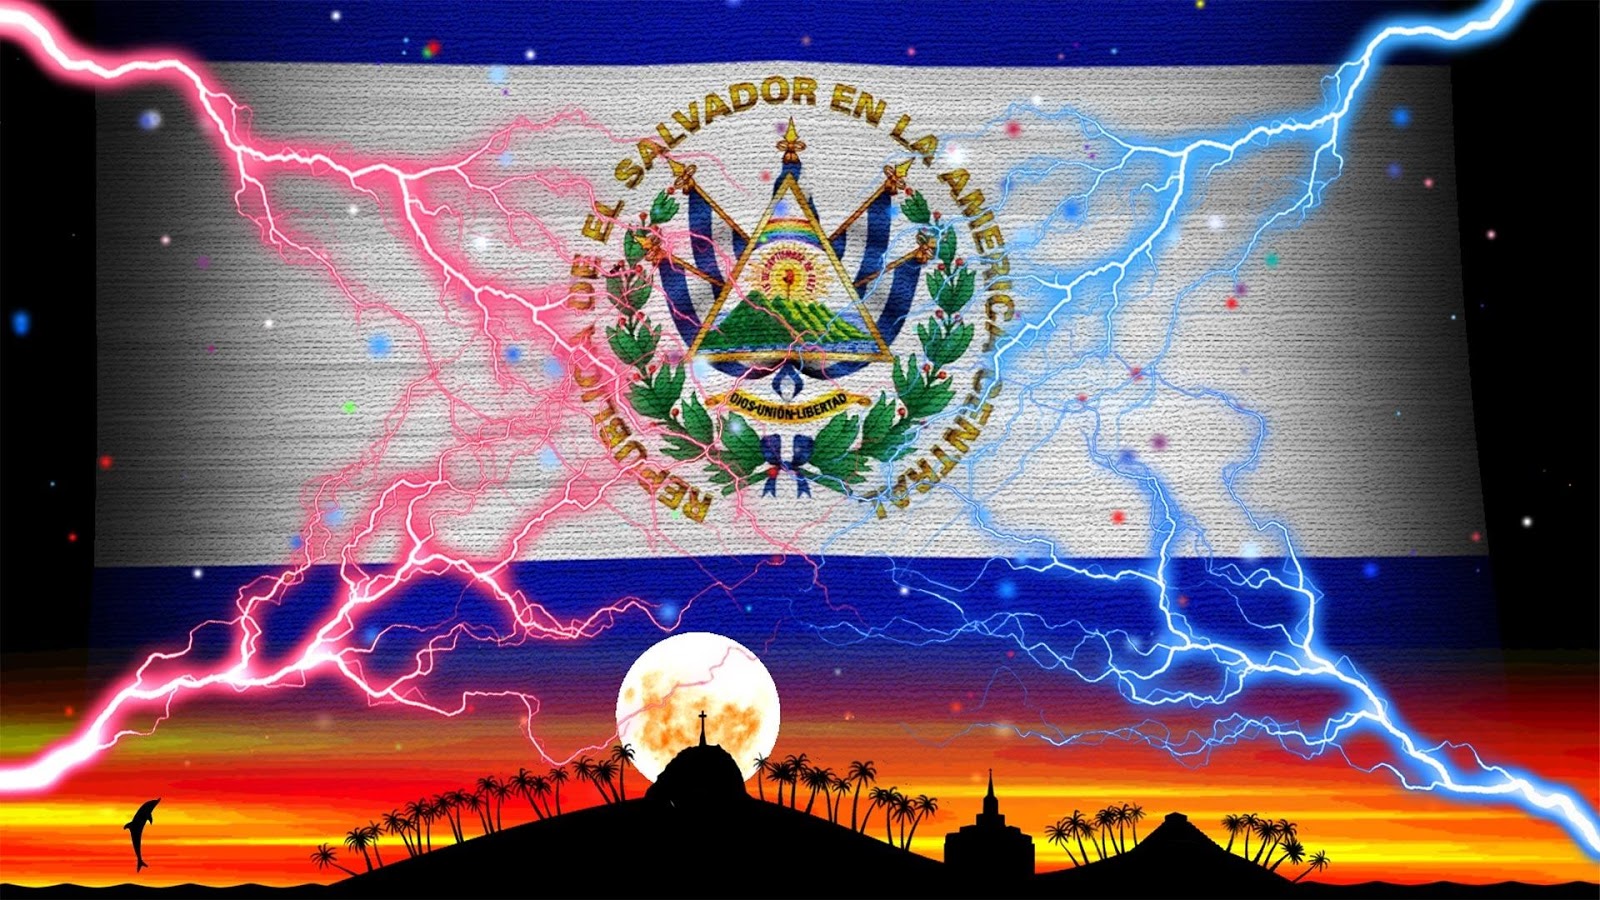 El Salvador Flag Wallpaper Android Apps On Google Play